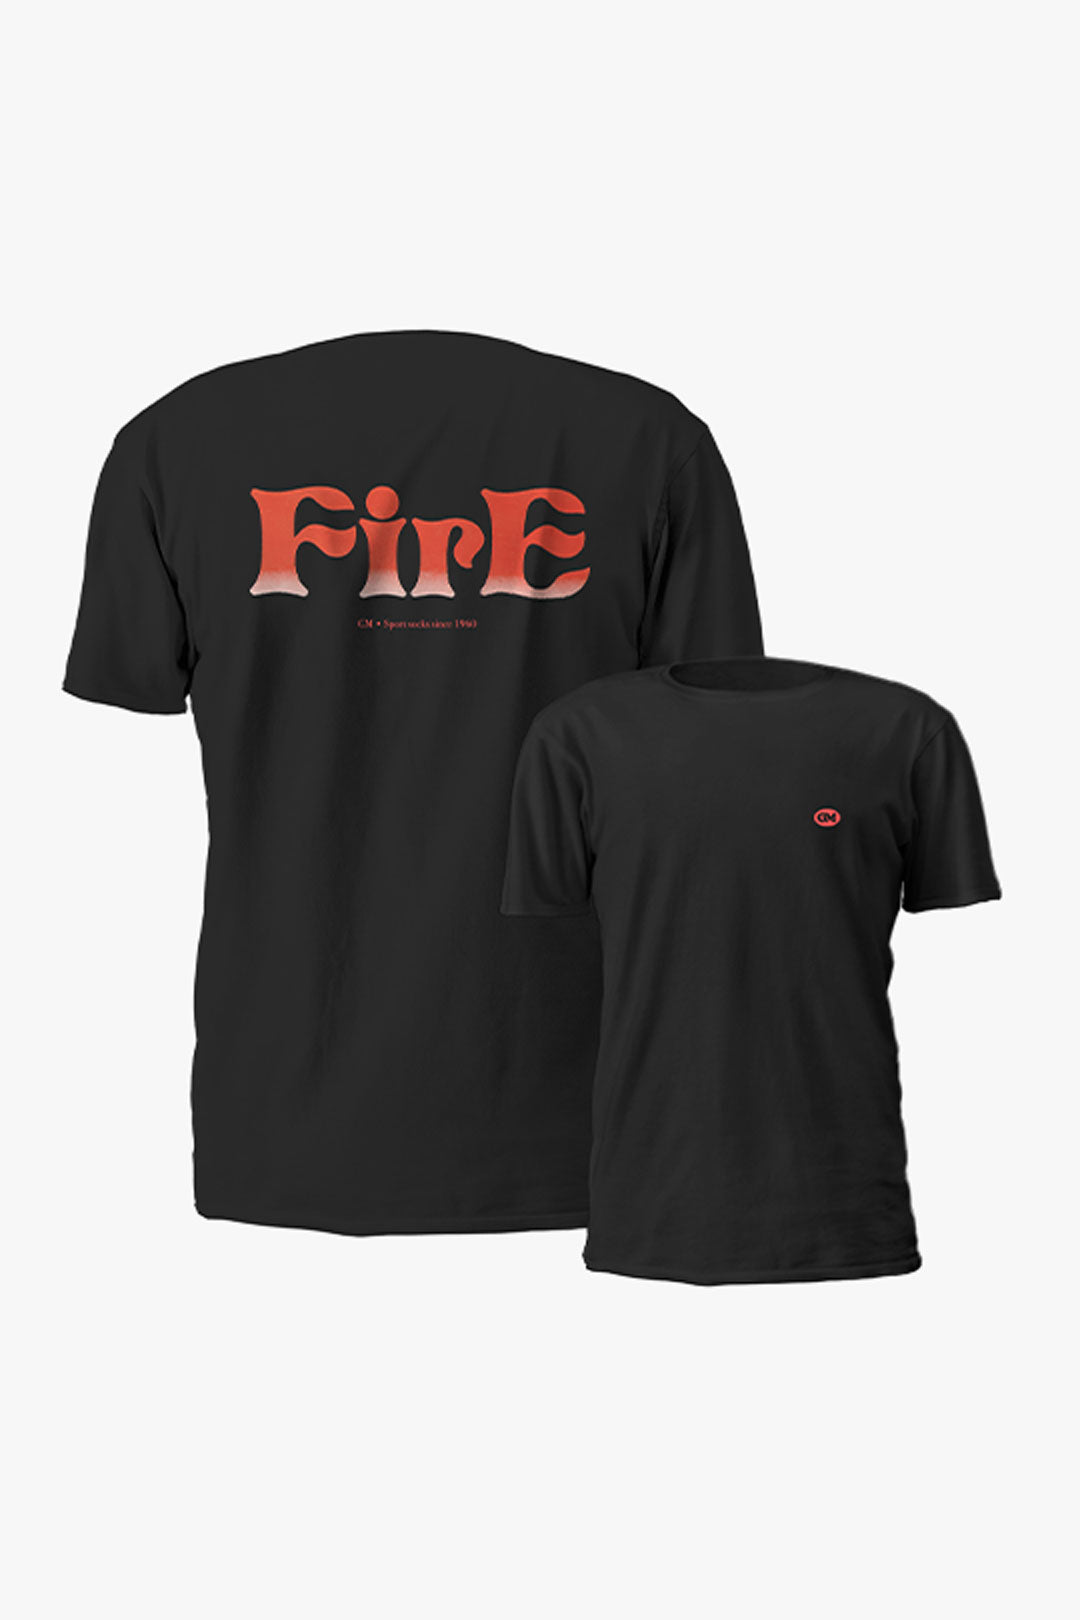 T-shirt Fire 8010 | T-shirt in cotone biologico